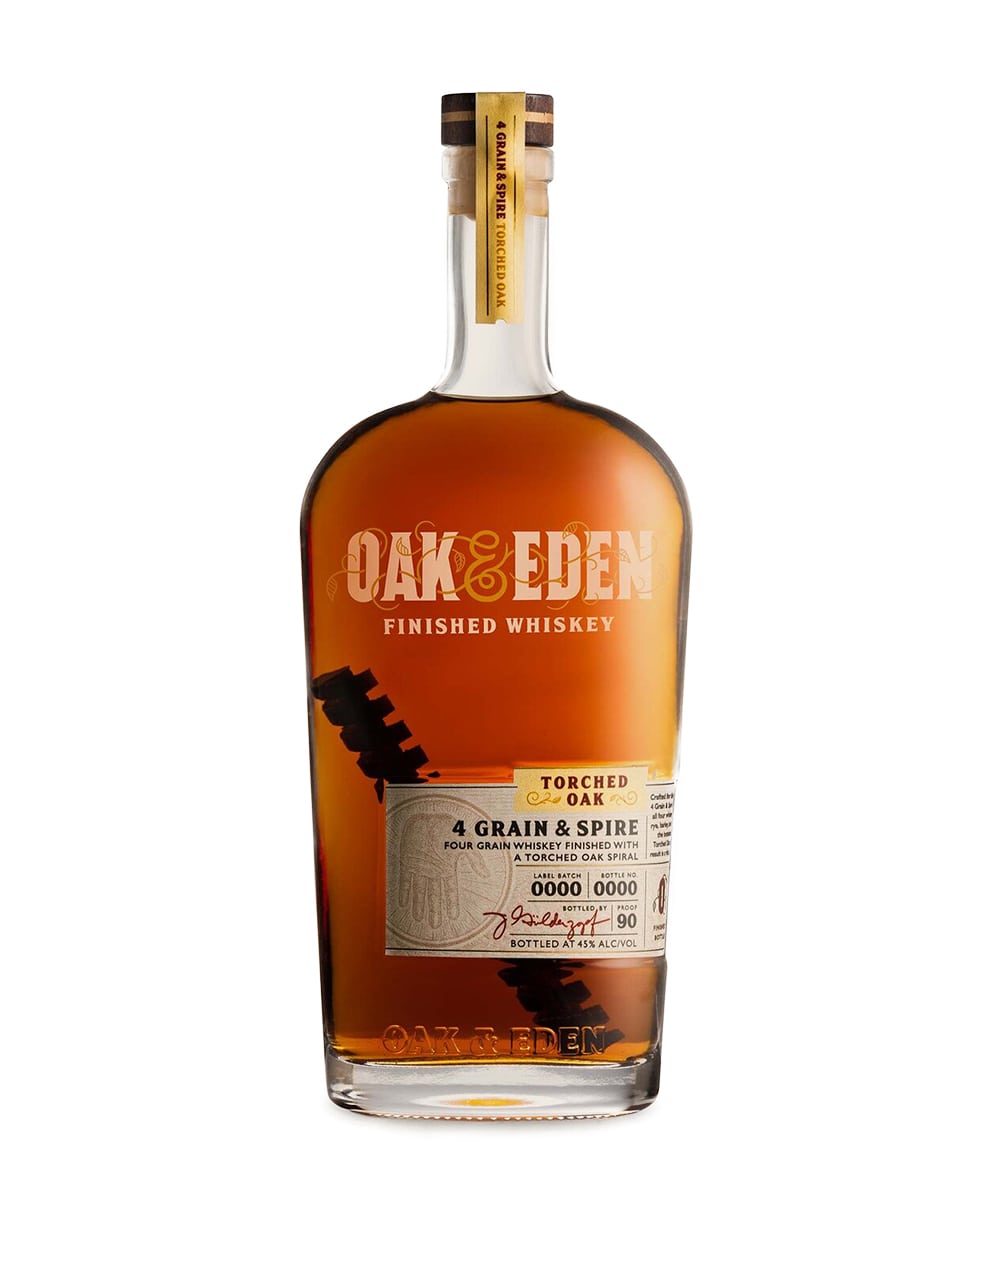 Oak & Eden Finished  Whiskey Torched Oak 4 Grain & Spire